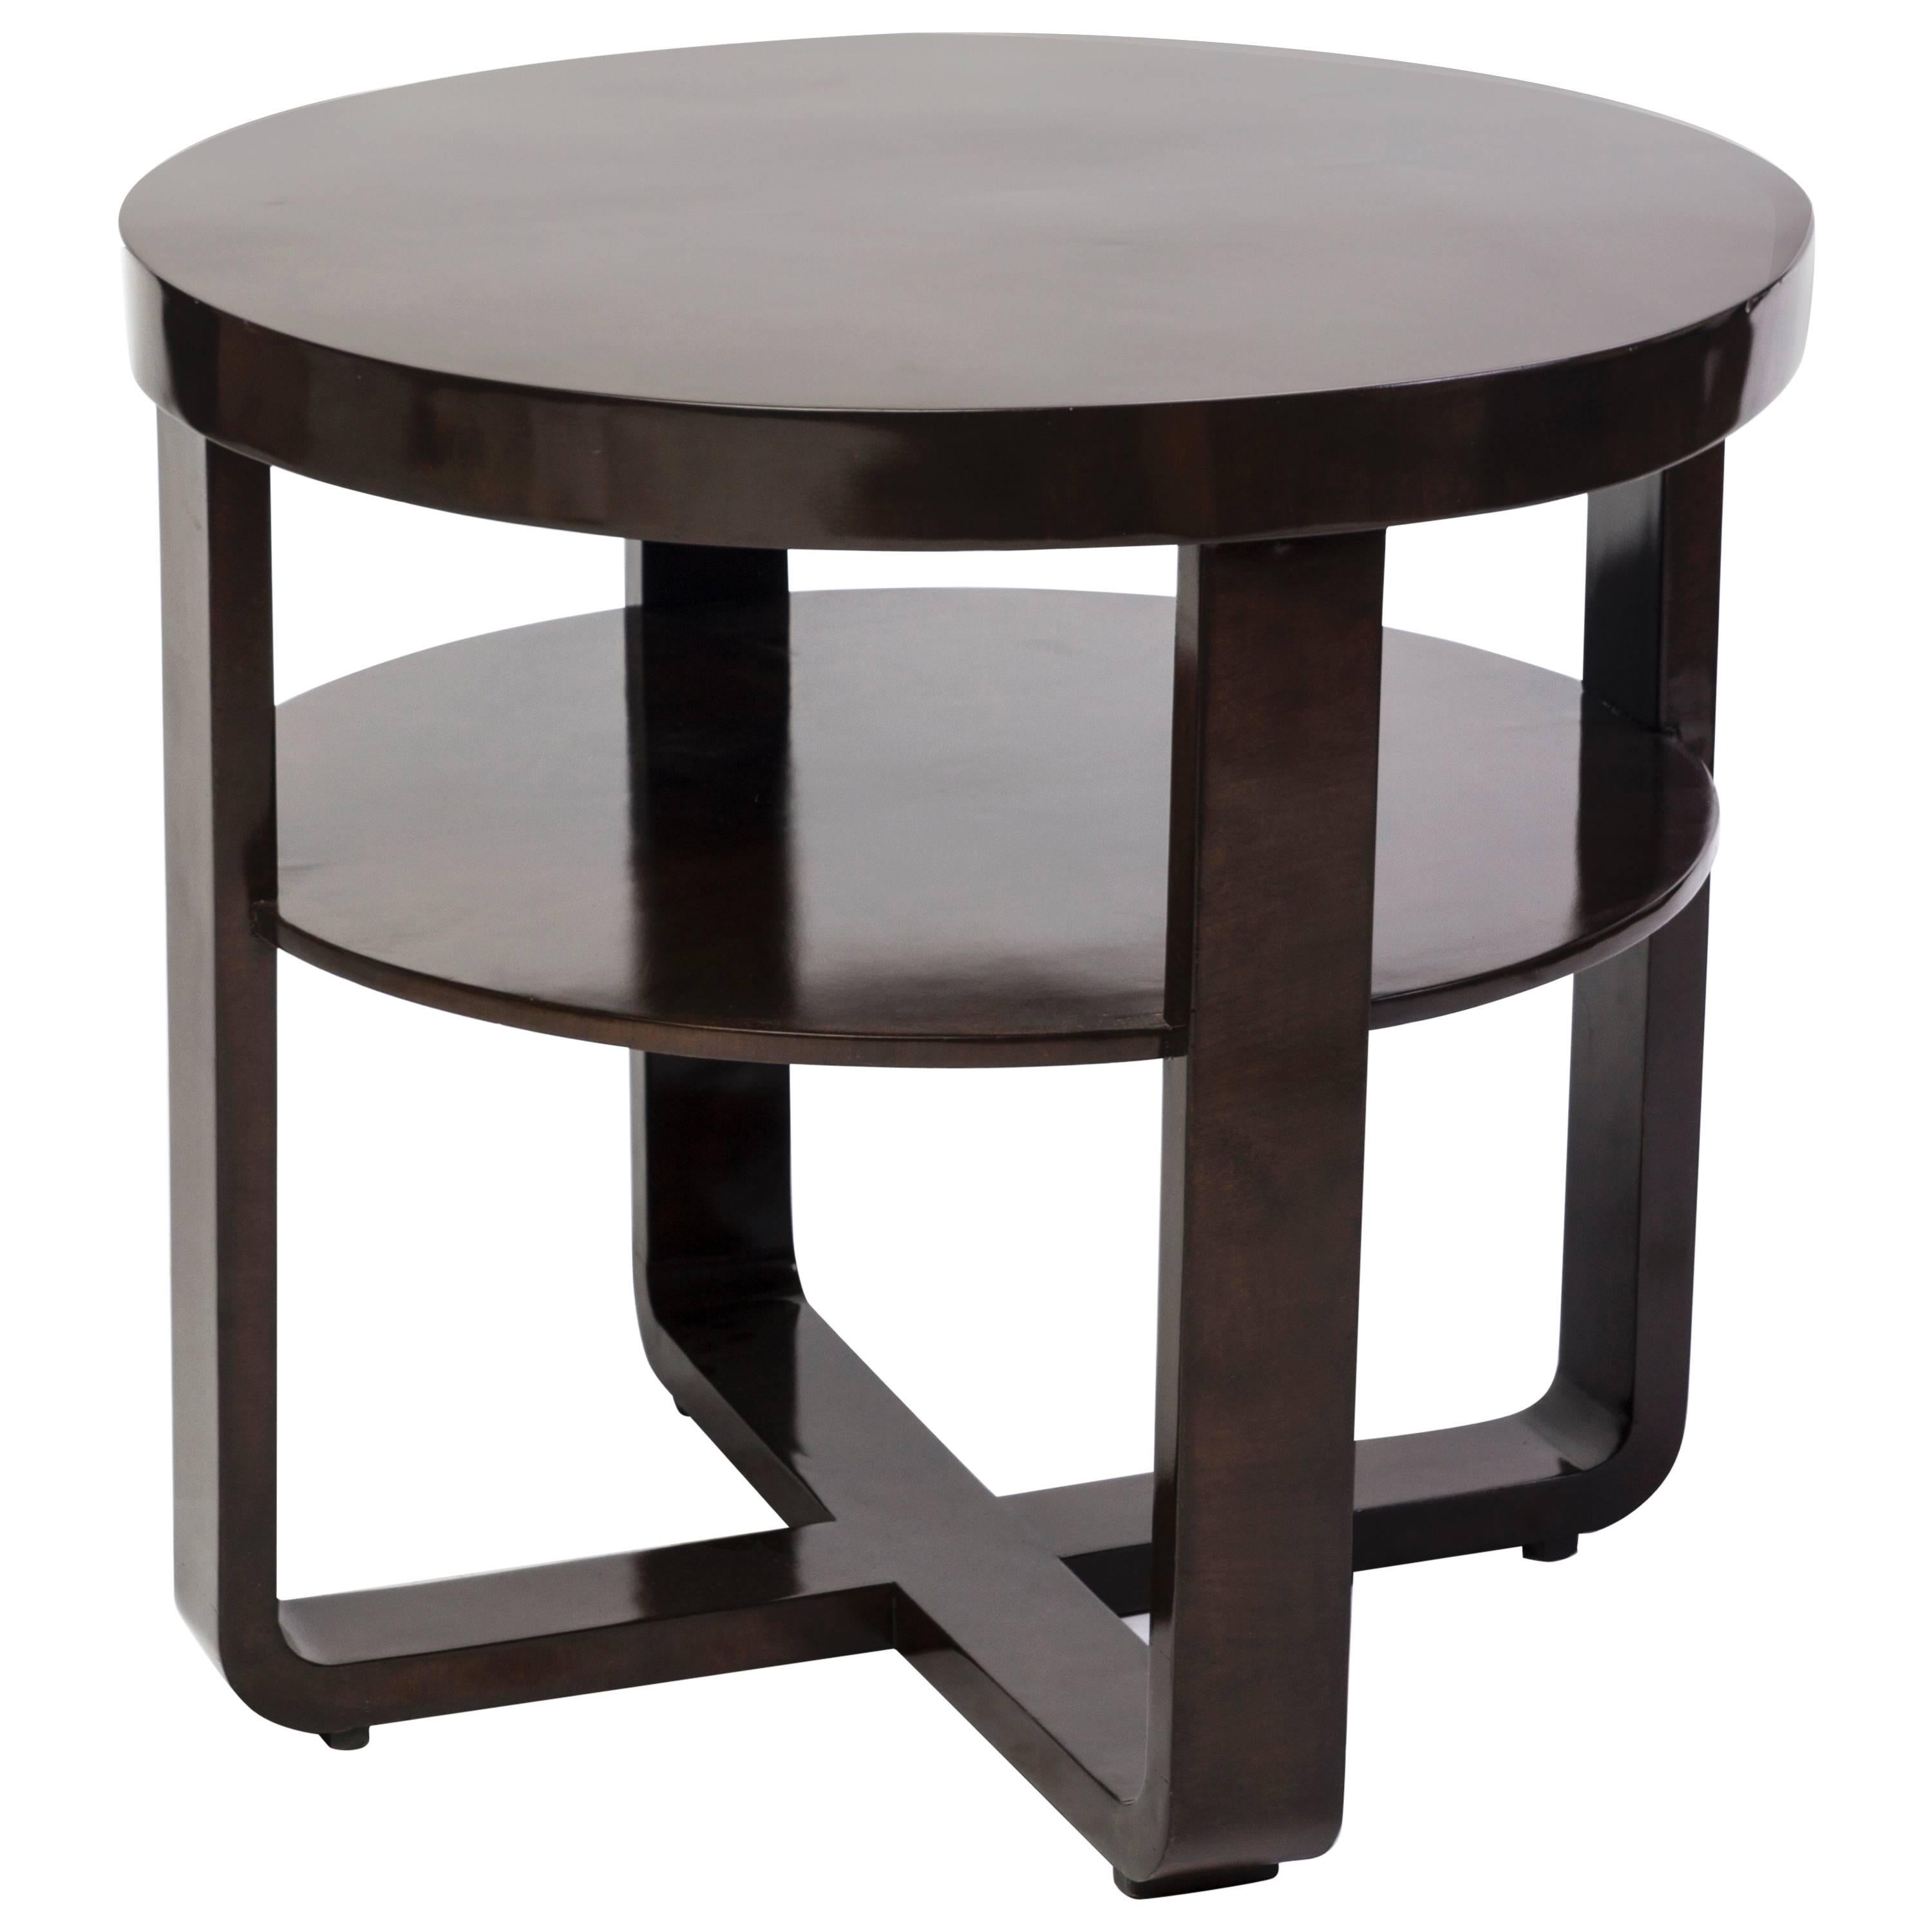 Elegant Art Deco Round Side Table or Gueridon